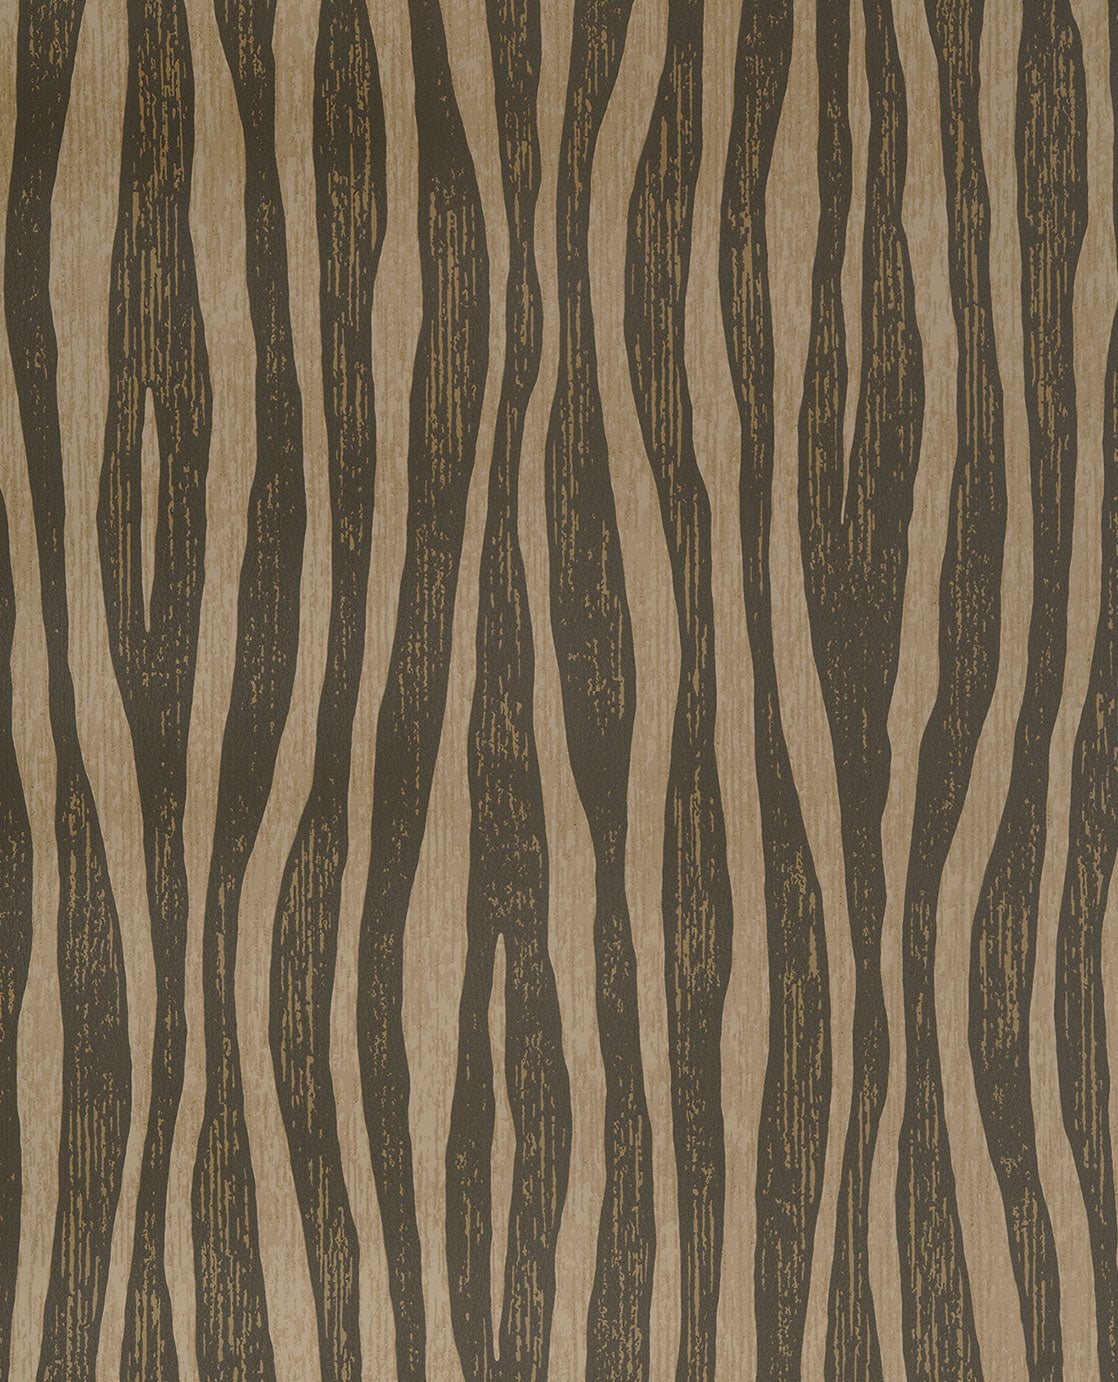 Skin Textured Zebra Stripes wallpaper